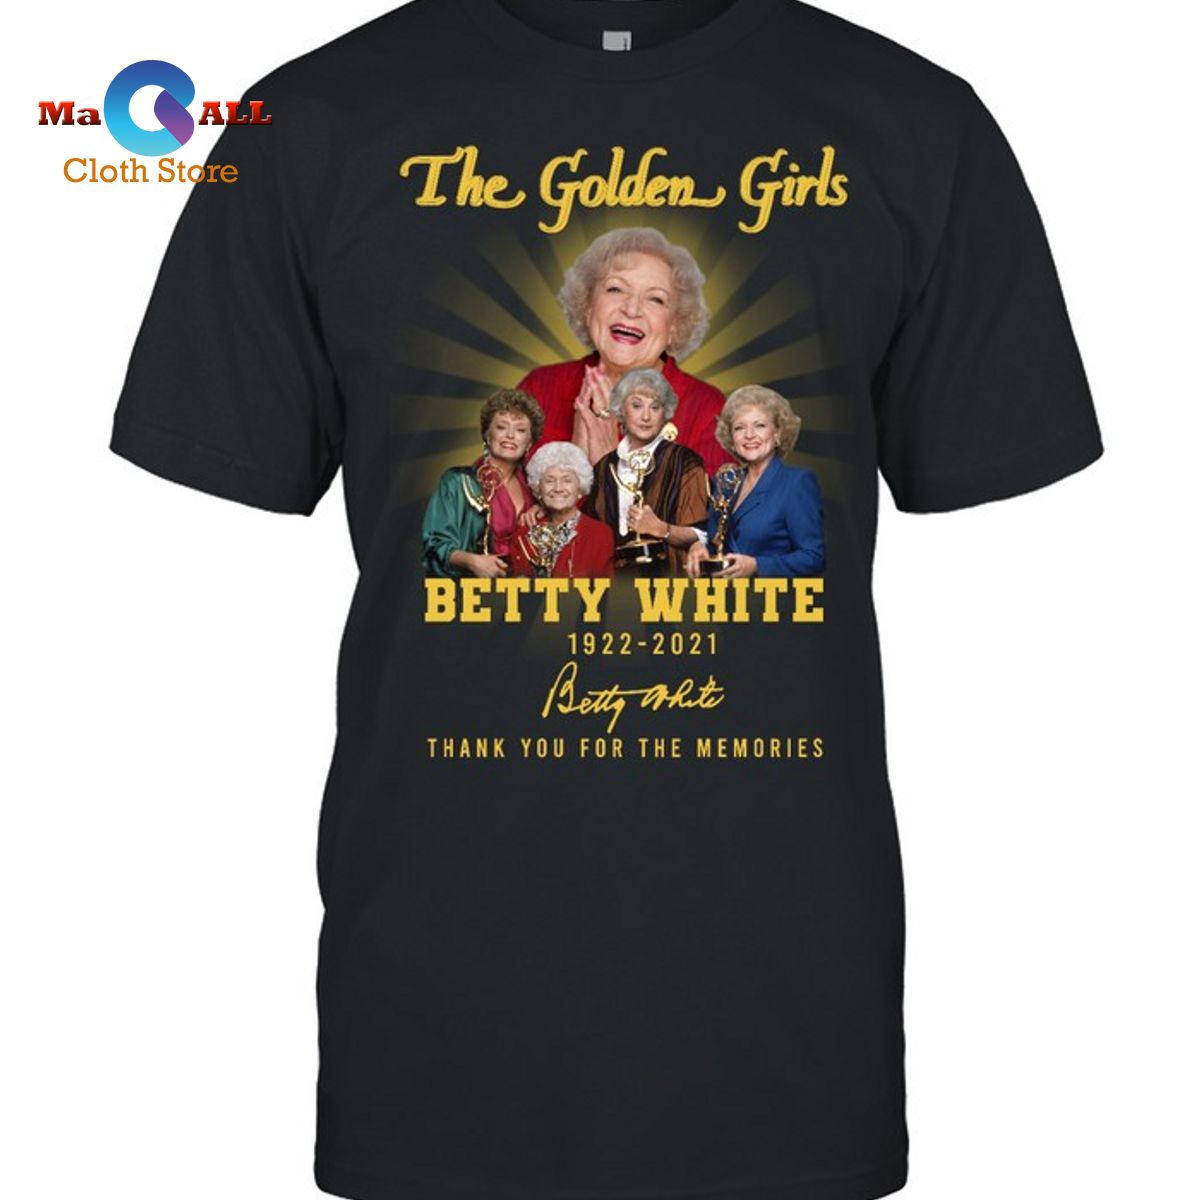 [NEW] The Golden Girls Betty White T-Shirt - Macall Cloth Store ...